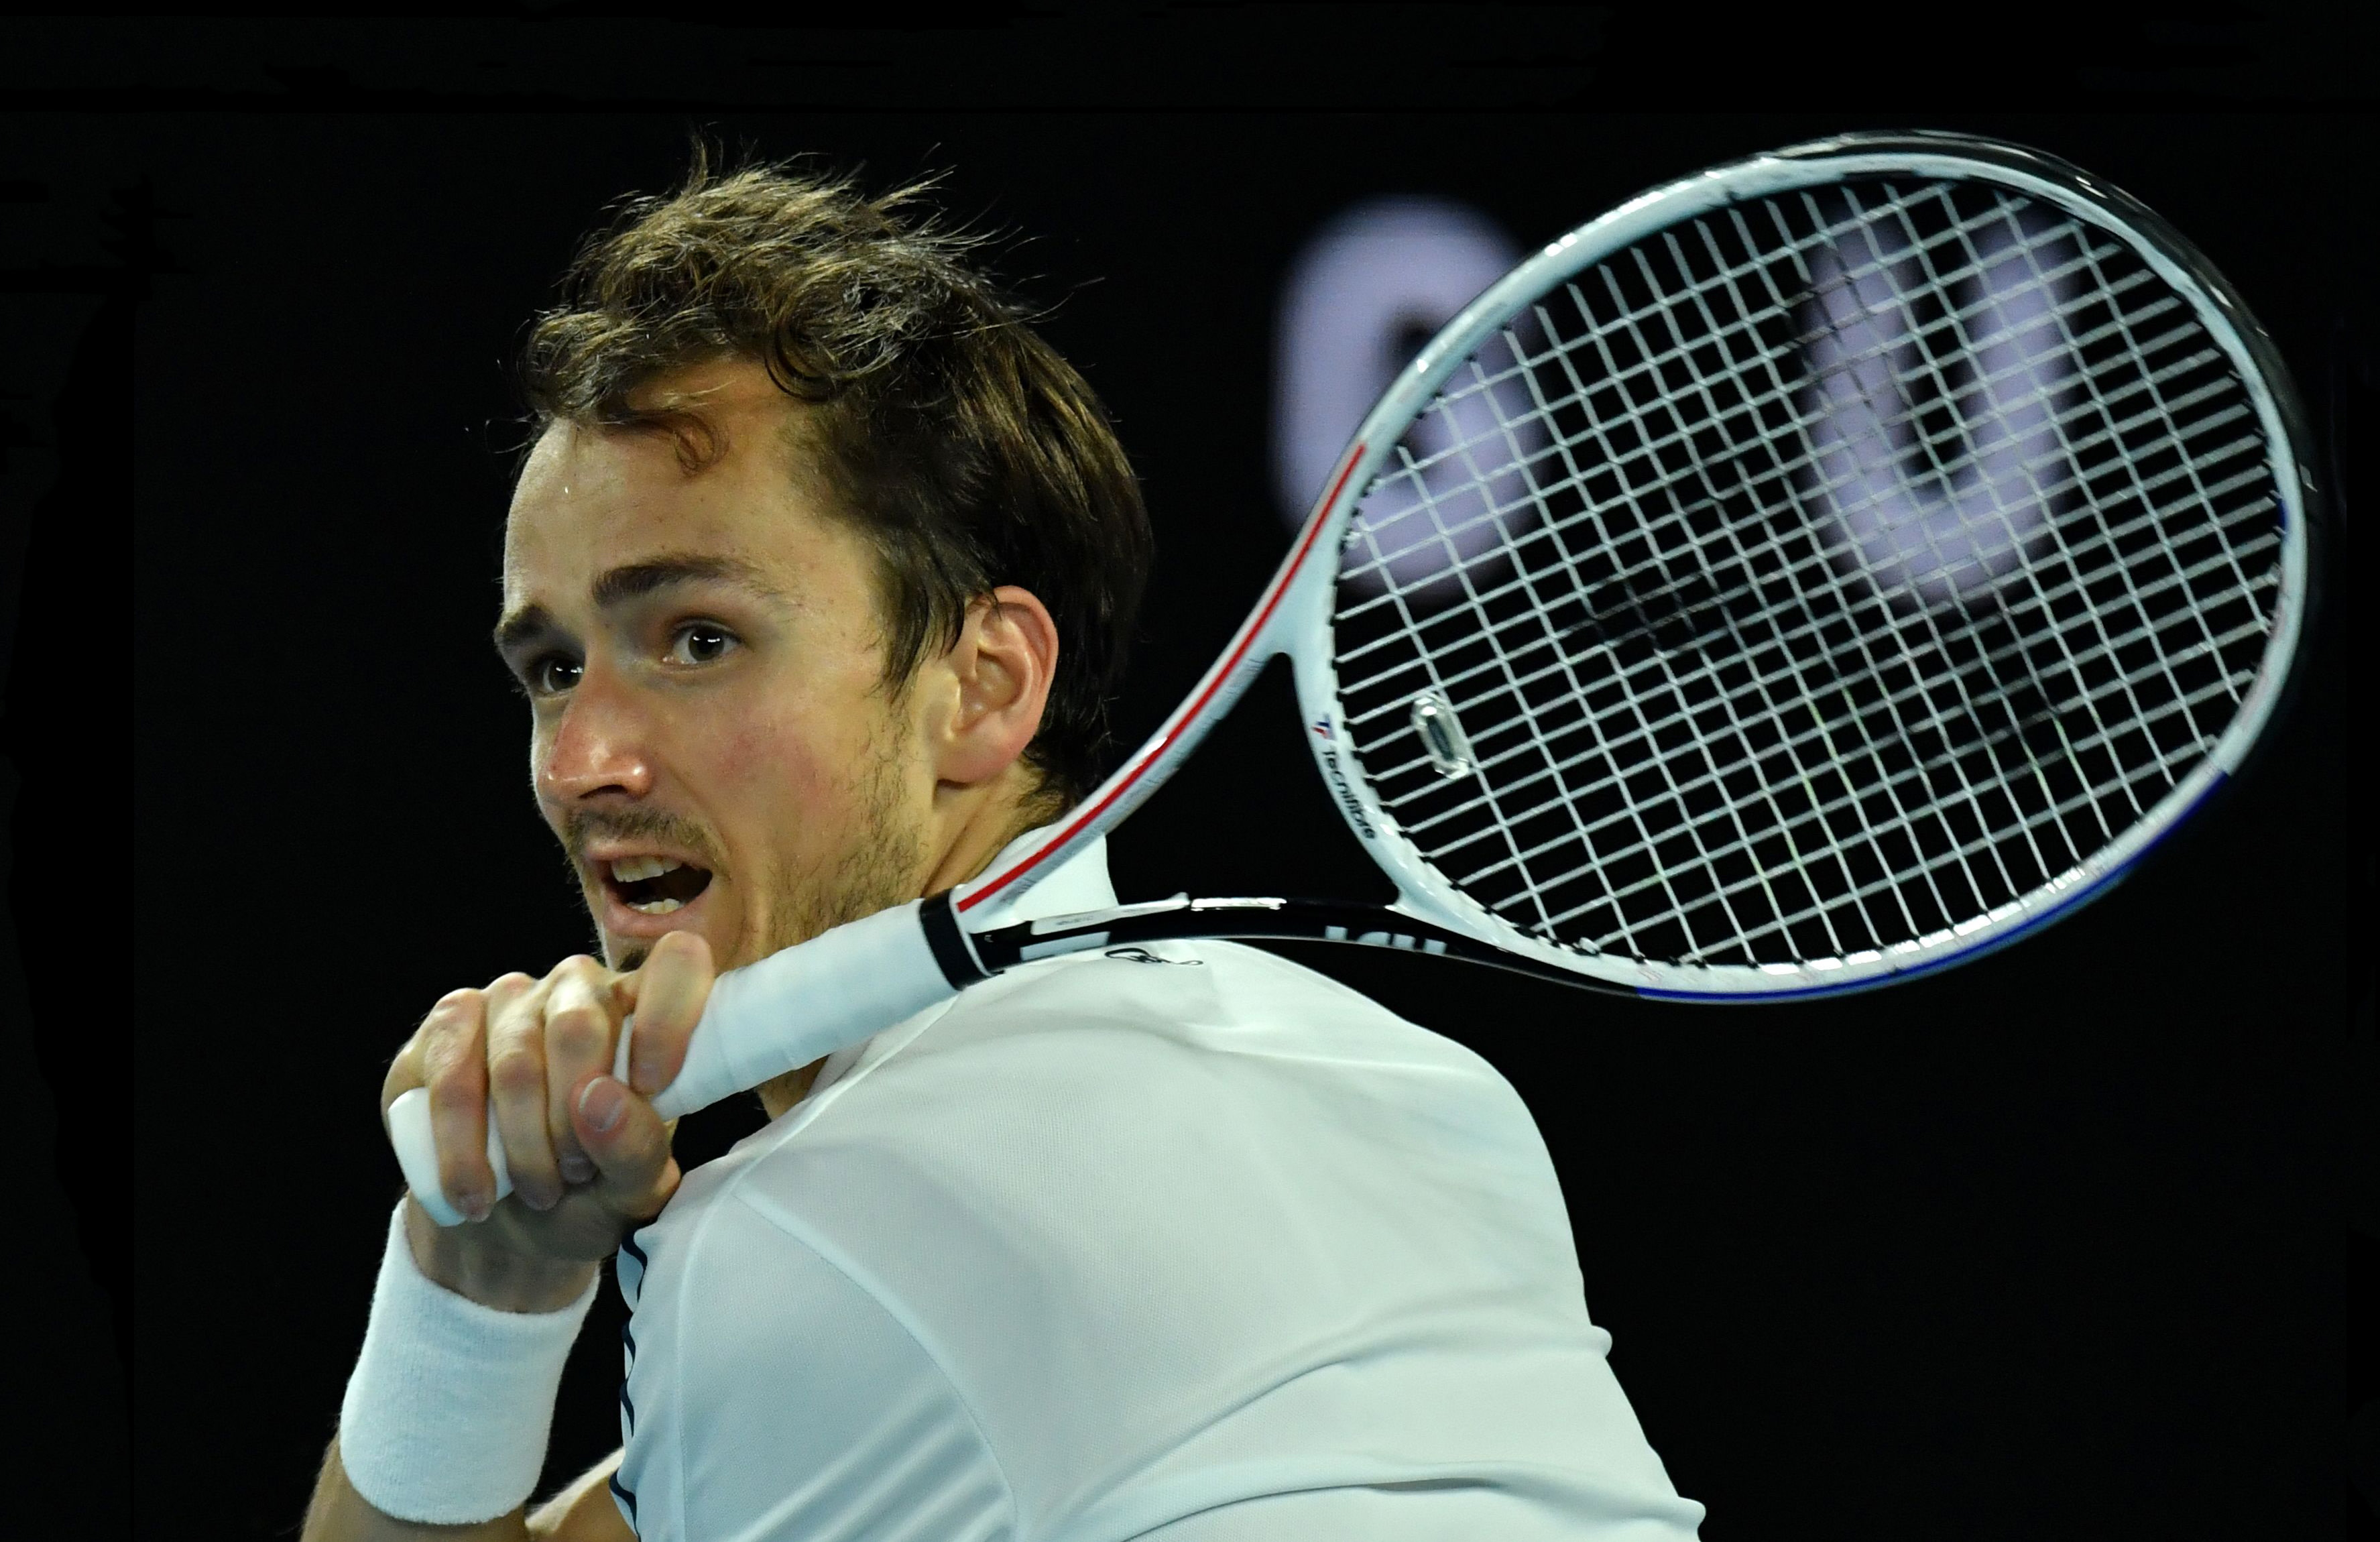 Medvedev to carry 20match win streak into first Australian Open final